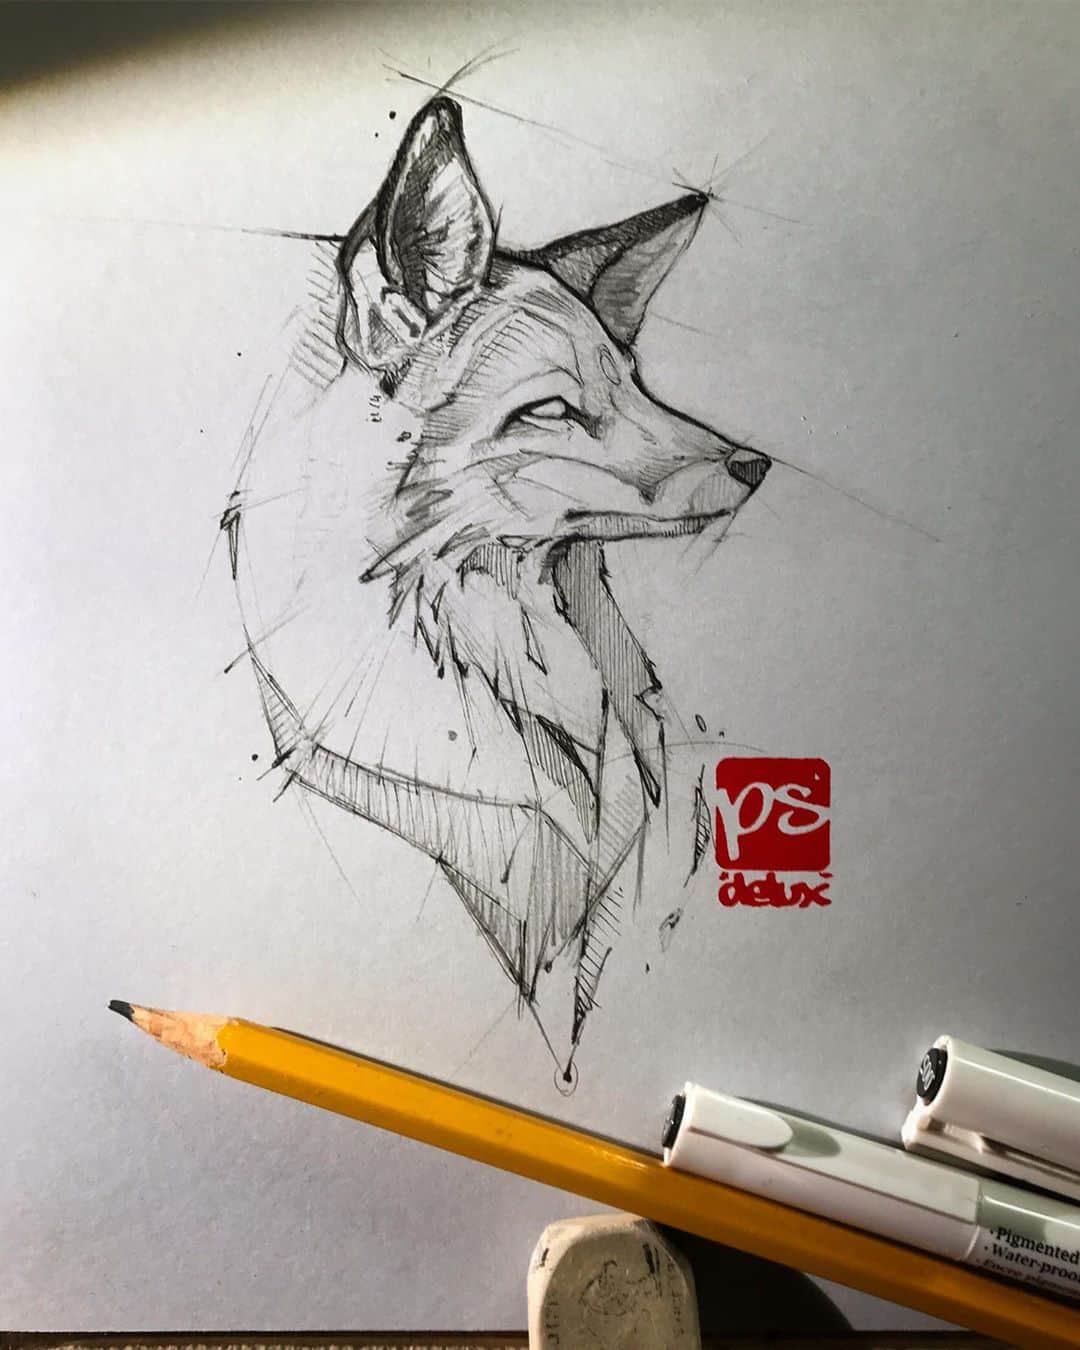 Pencil sketch artist Psdelux